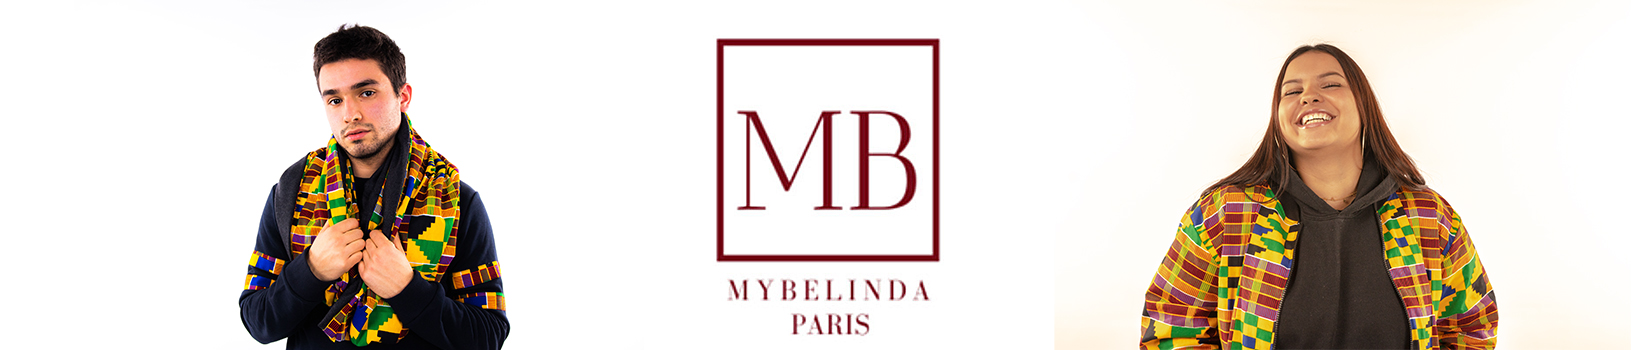 Mybelinda Paris